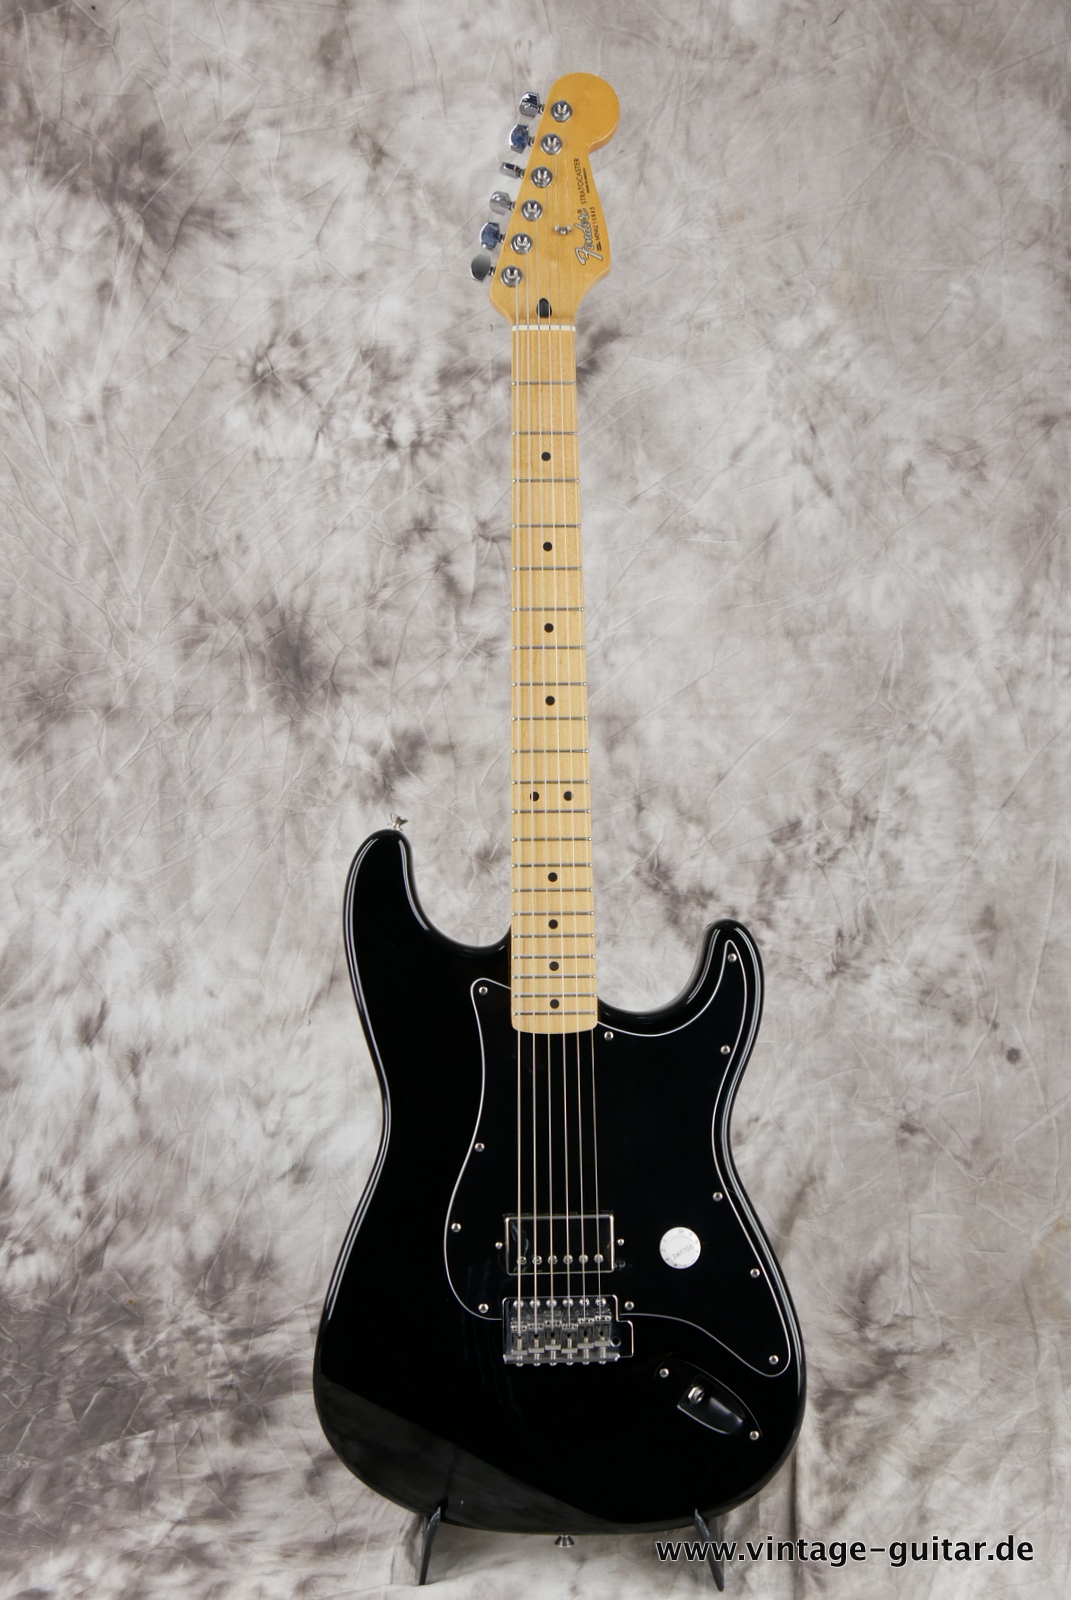 Fender_Stratocaster_black_1996_Humbucker_made_in_mexico-001.JPG